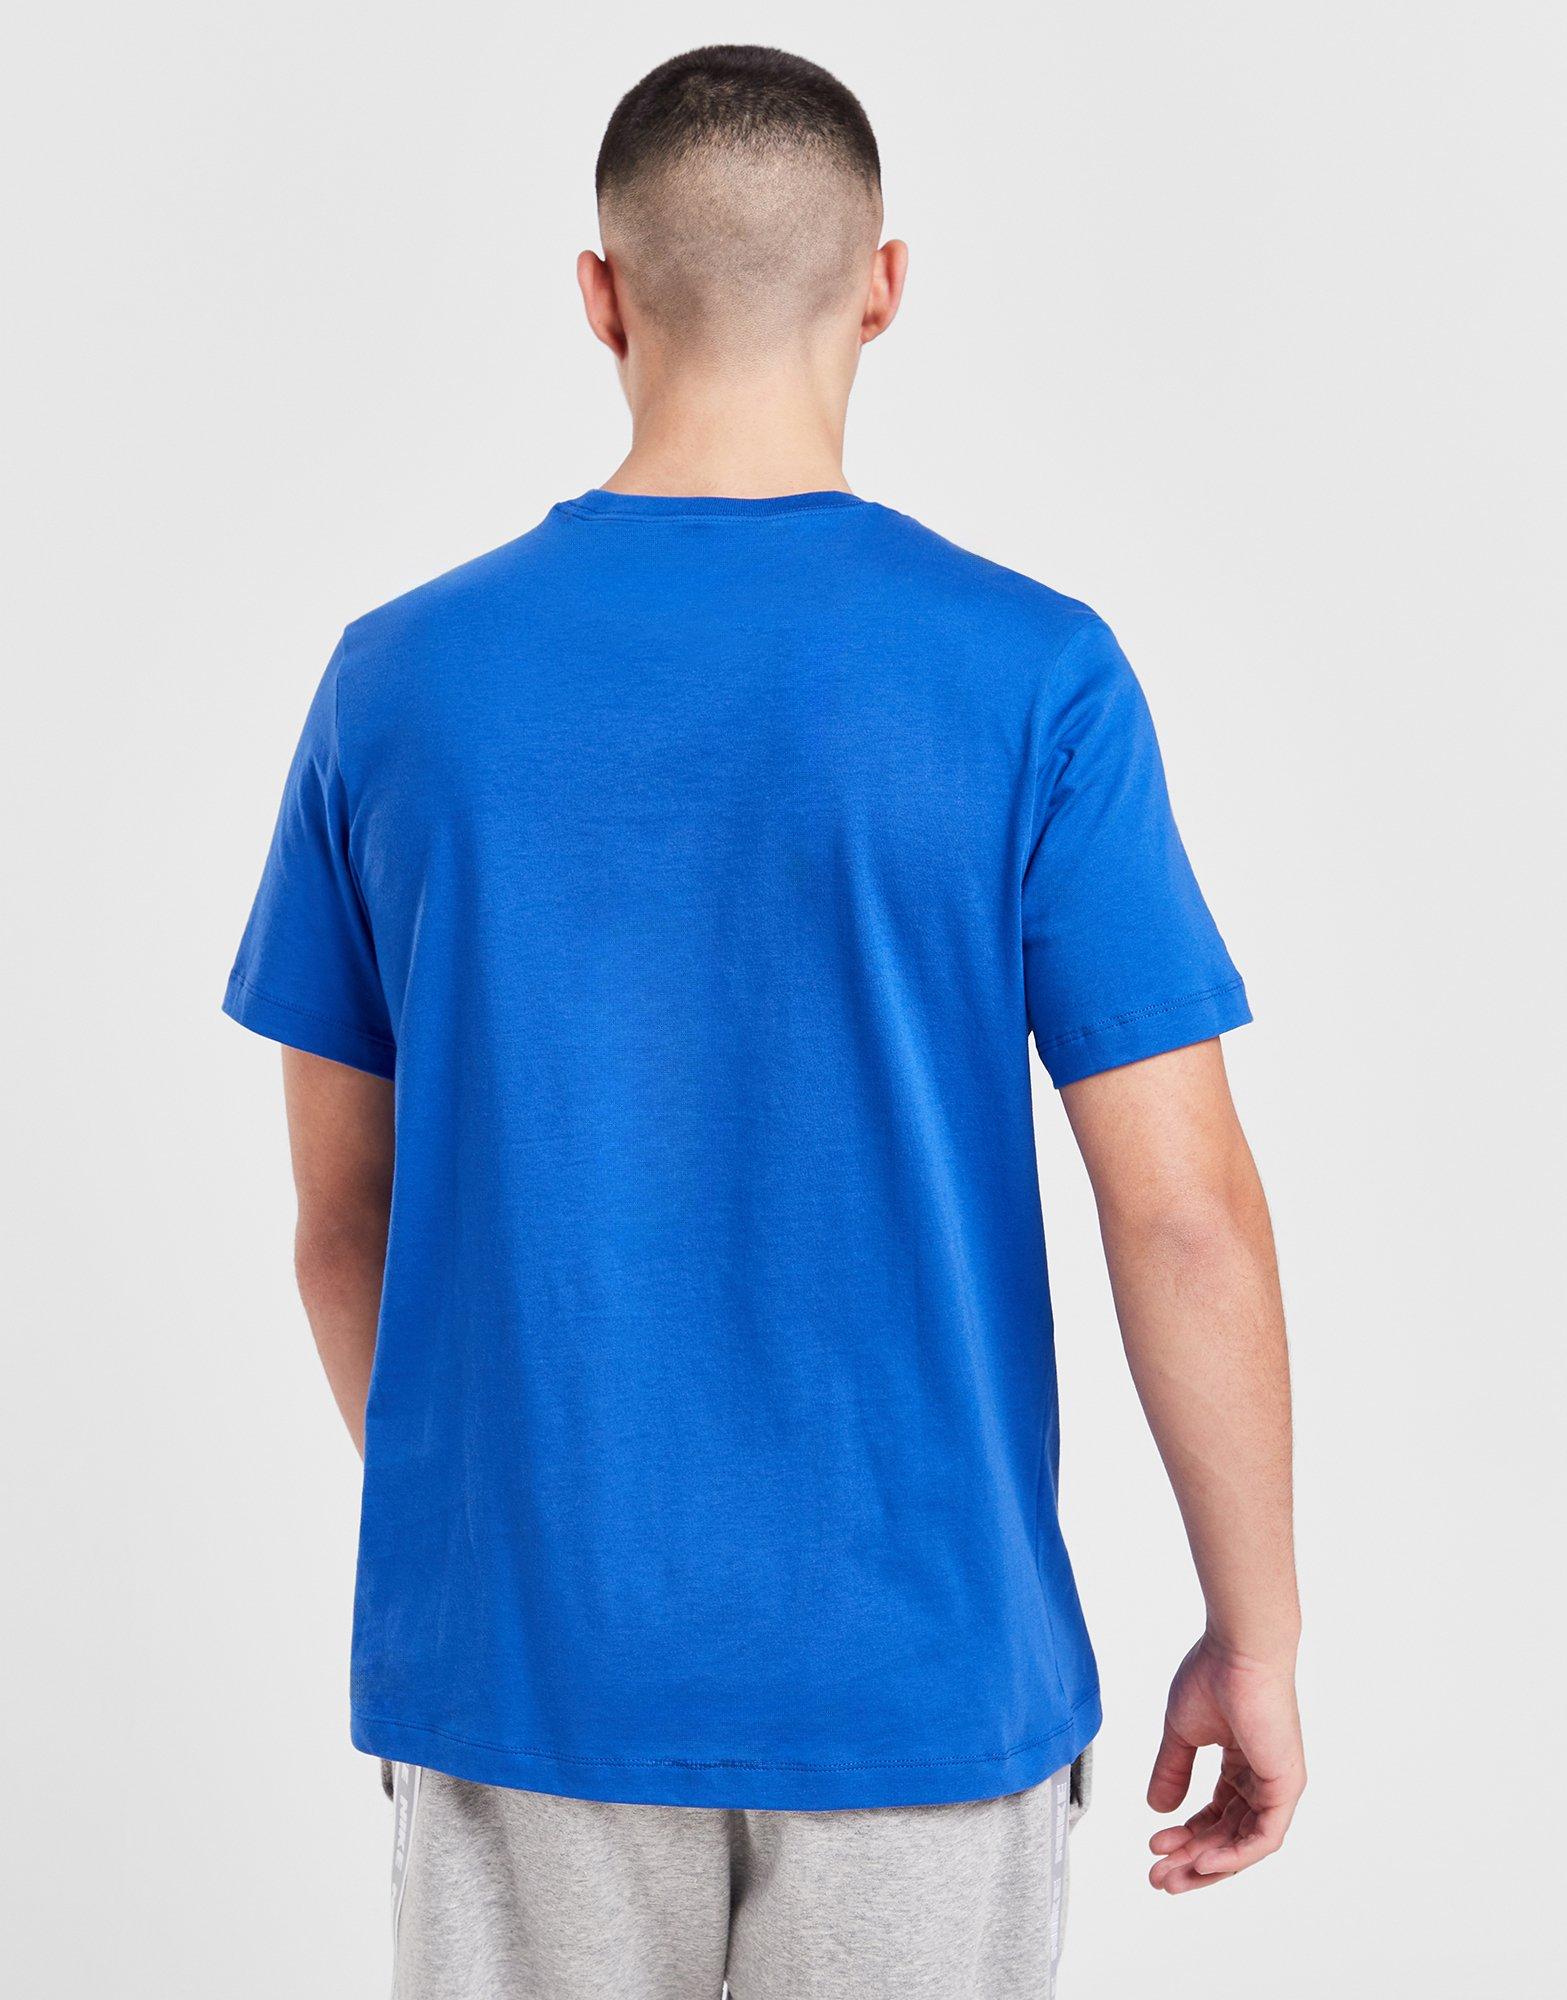 T-SHIRT desportiva para homem PRO REGULAR azul capri – NOX